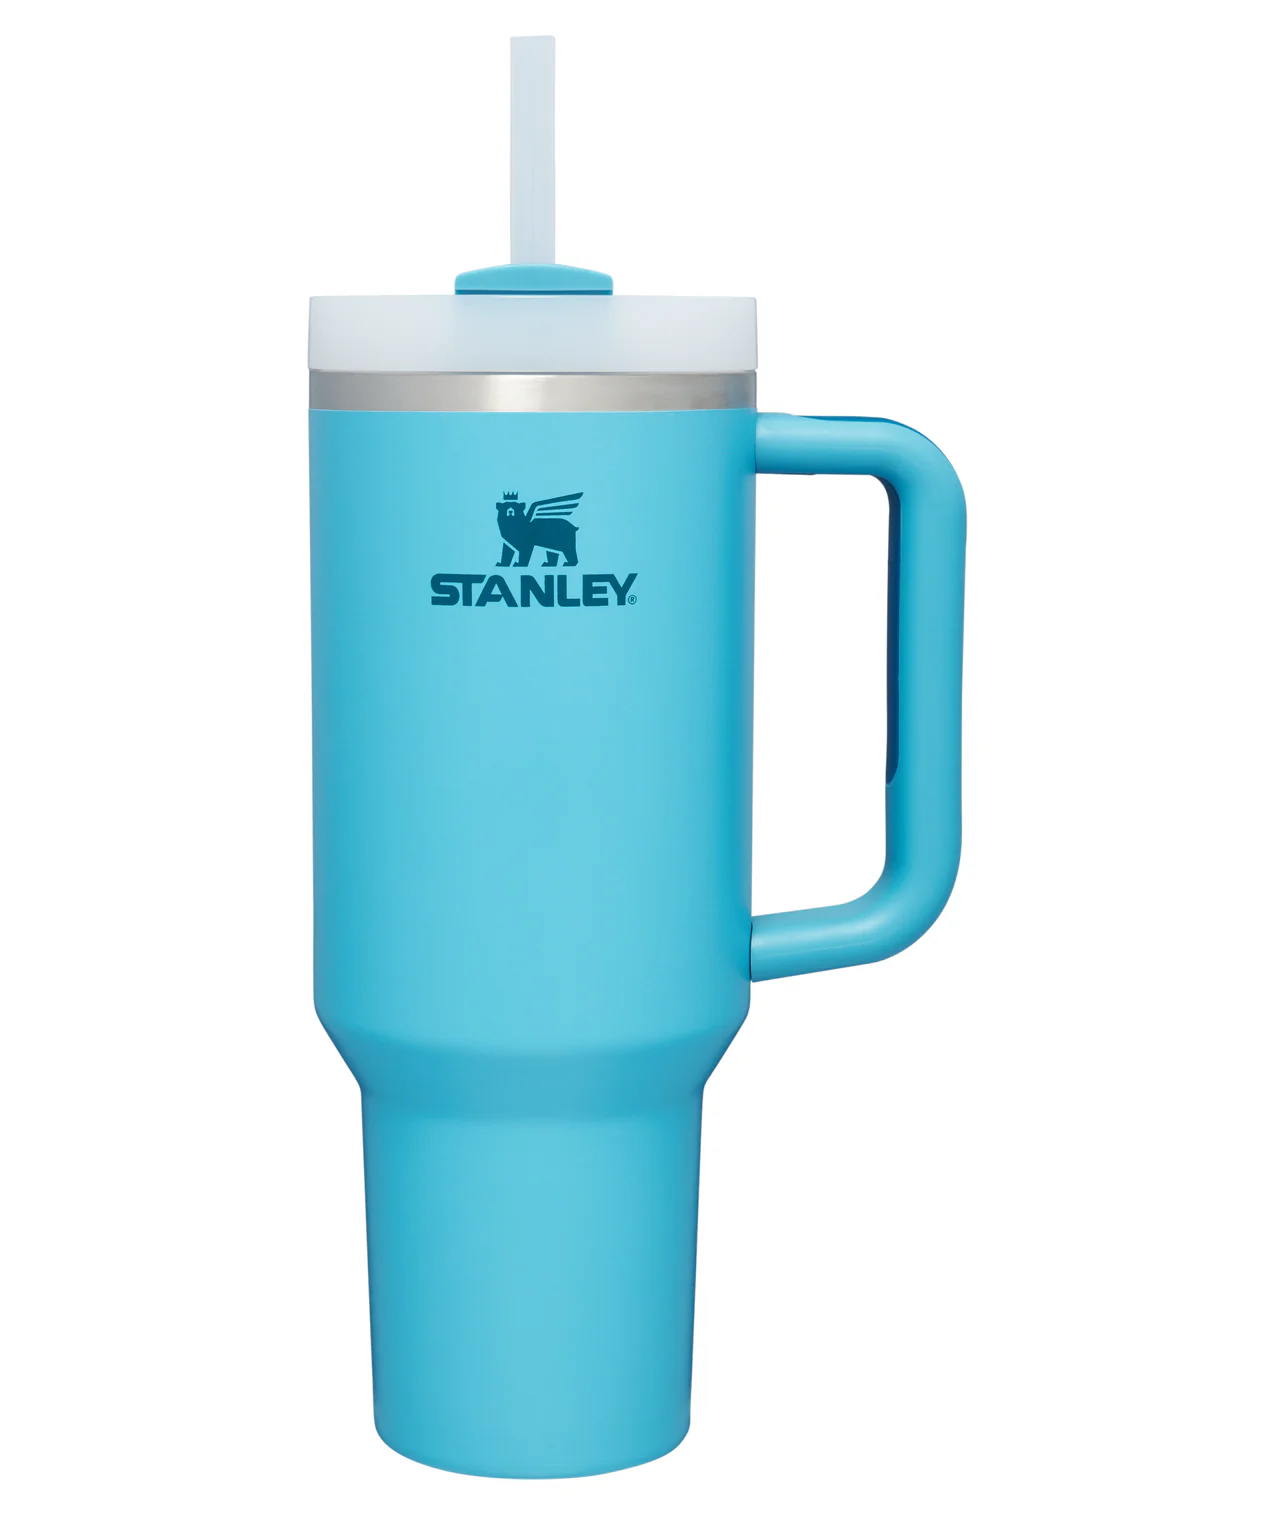 *NEW* Stanley Adventure Quencher Travel Tumbler Cup 40oz for sale - Aqua  color